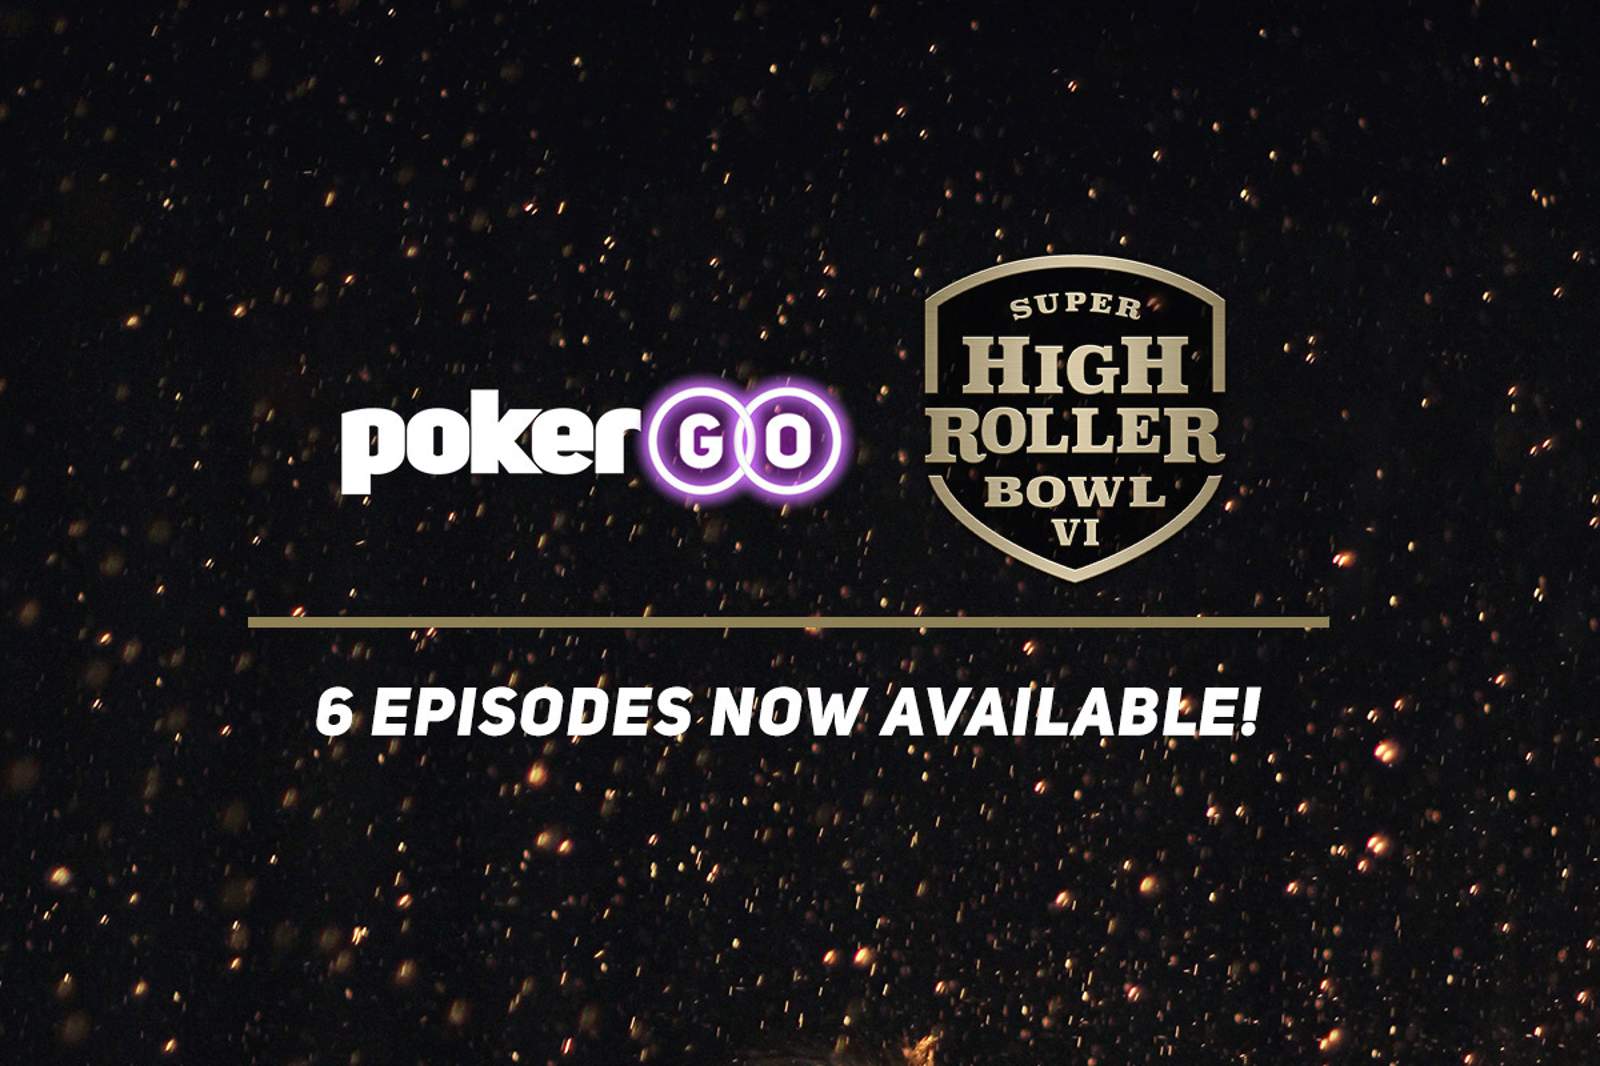 Watch Super High Roller Bowl VI Episodes on PokerGO Now